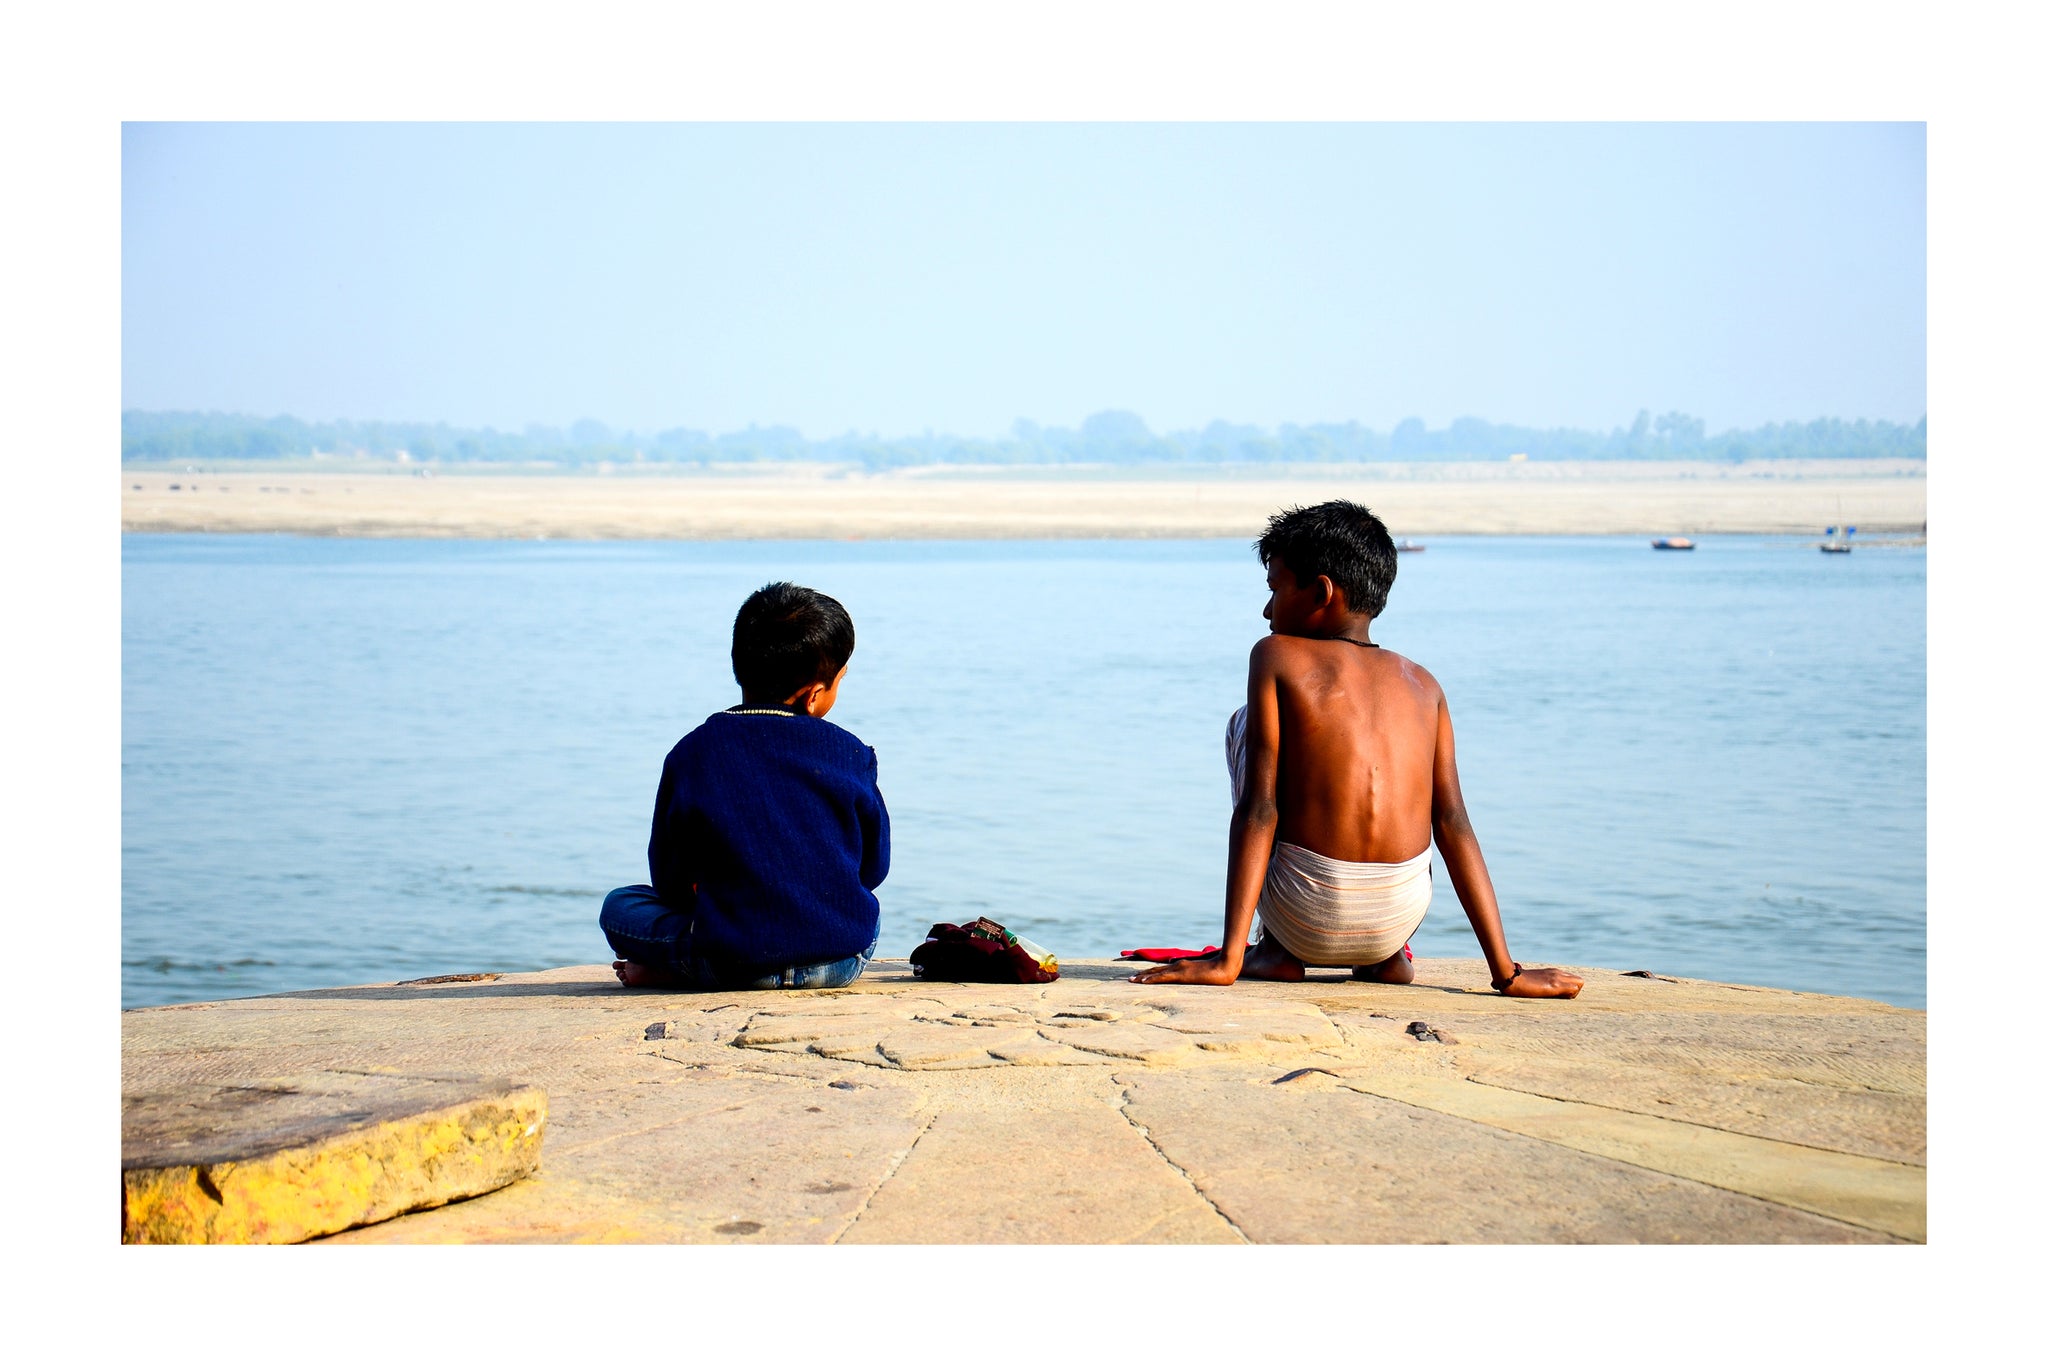 IND - Niños del Ganges